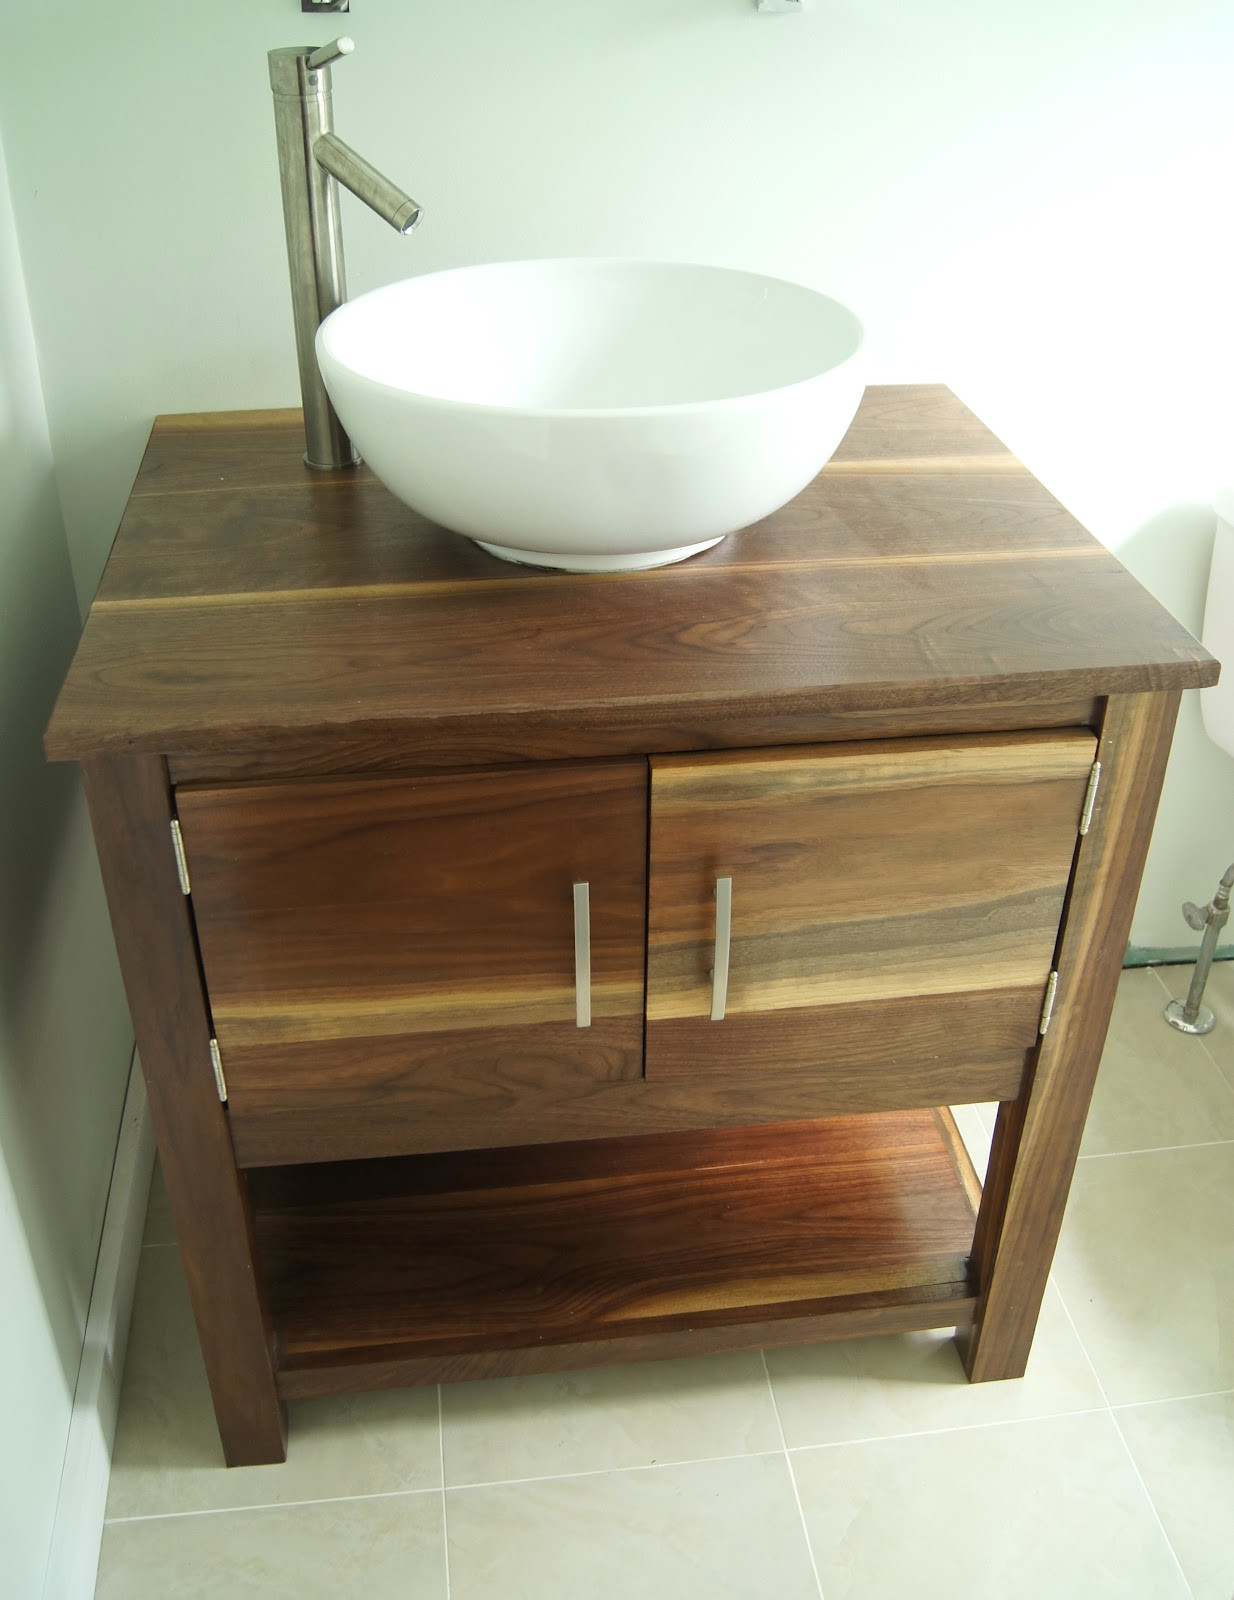 Best ideas about DIY Bathroom Cabinet
. Save or Pin Wightman Specialty Woods DIY Bathroom Vanity Now.